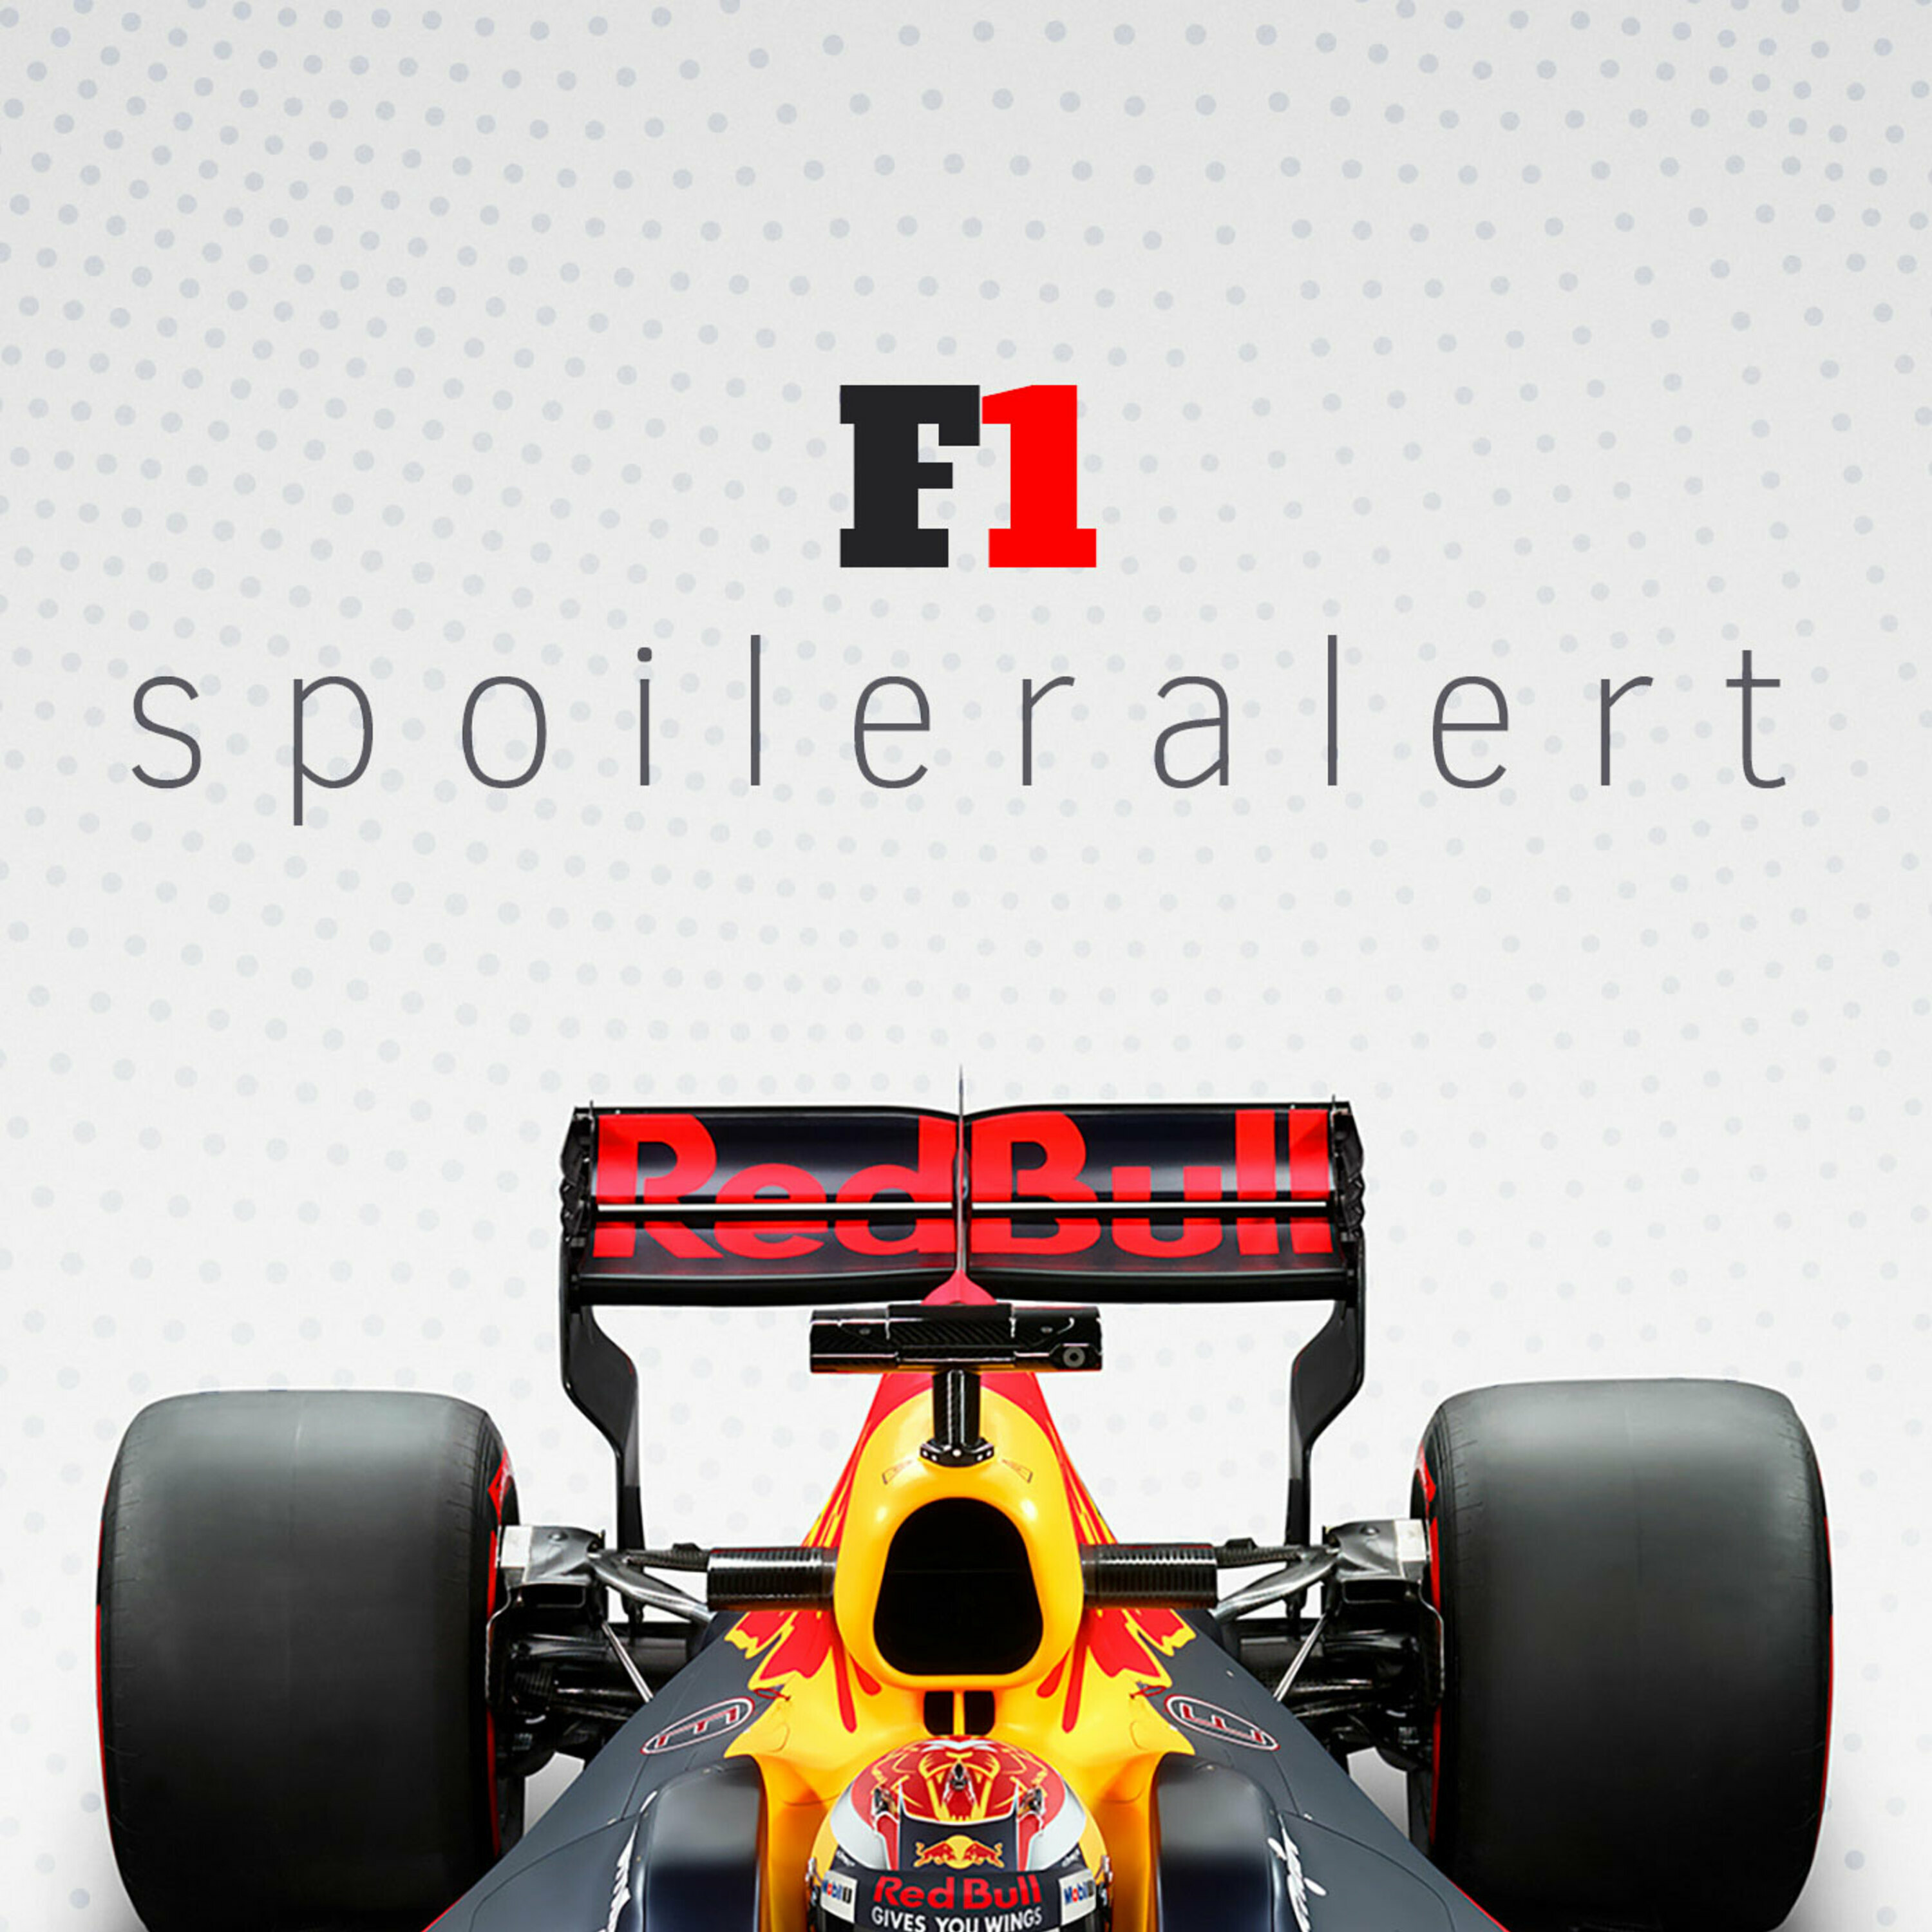 F1 Spoiler Alert logo